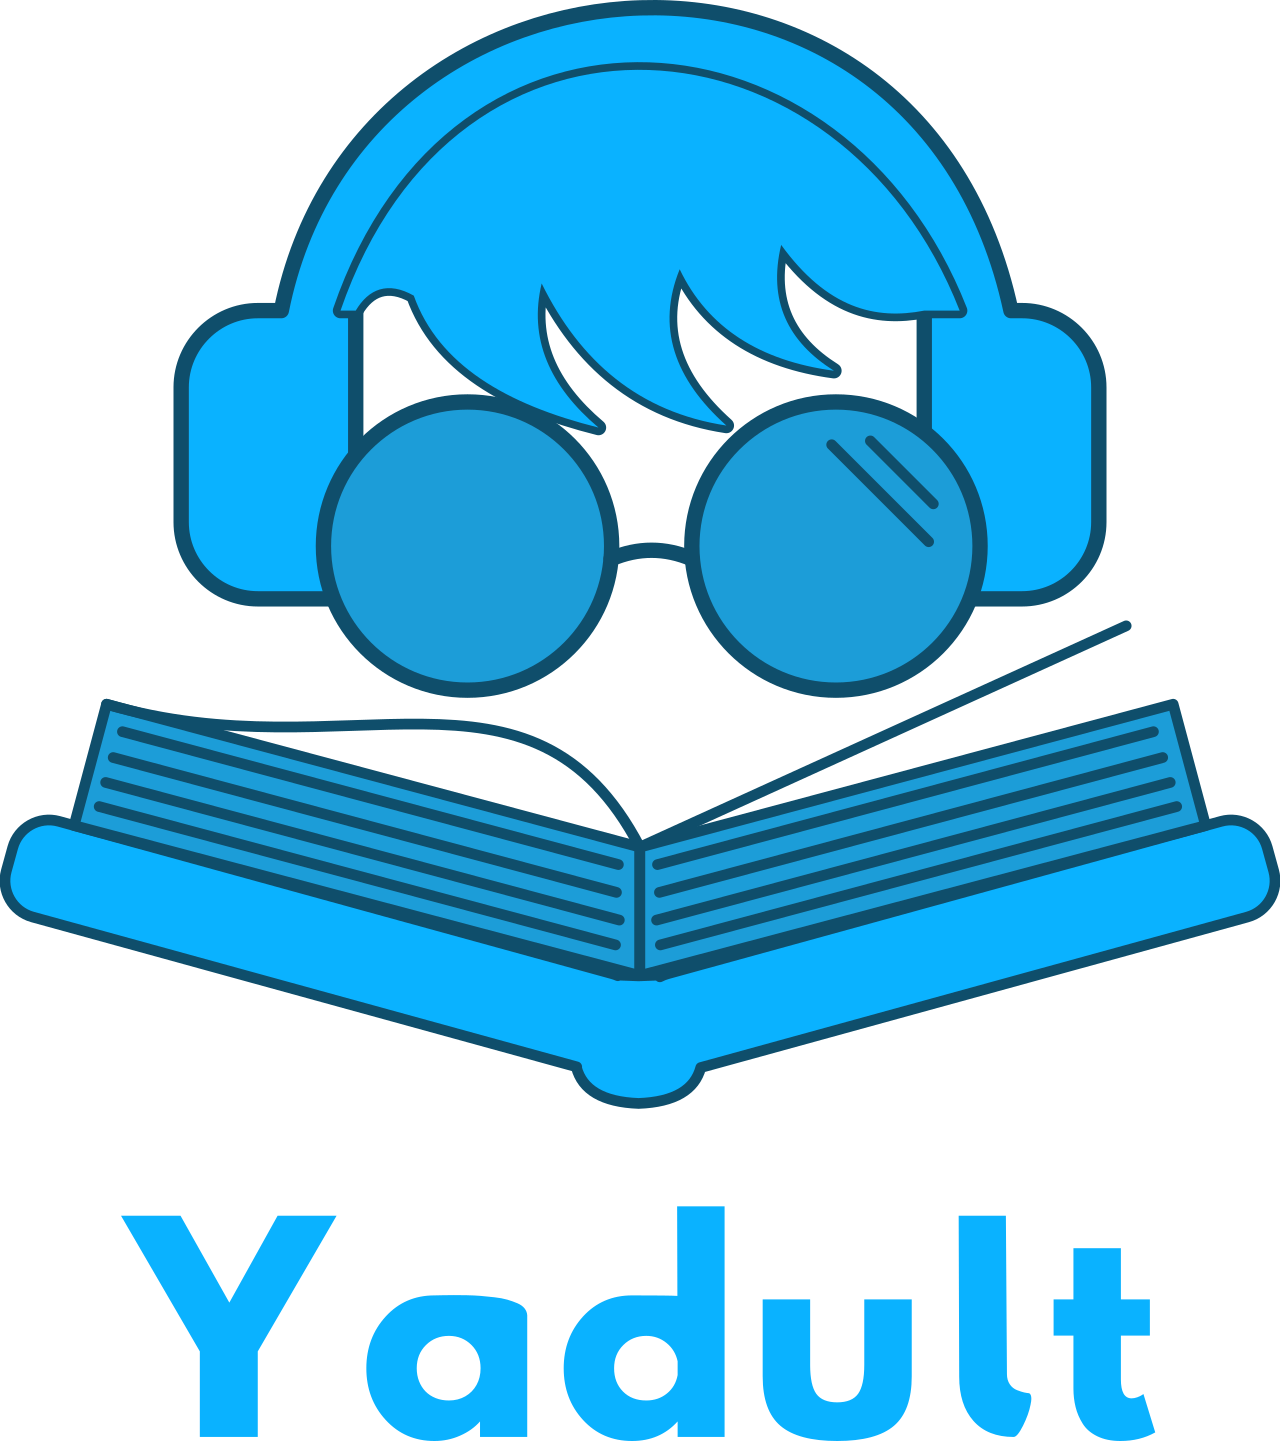 Yadult's logo